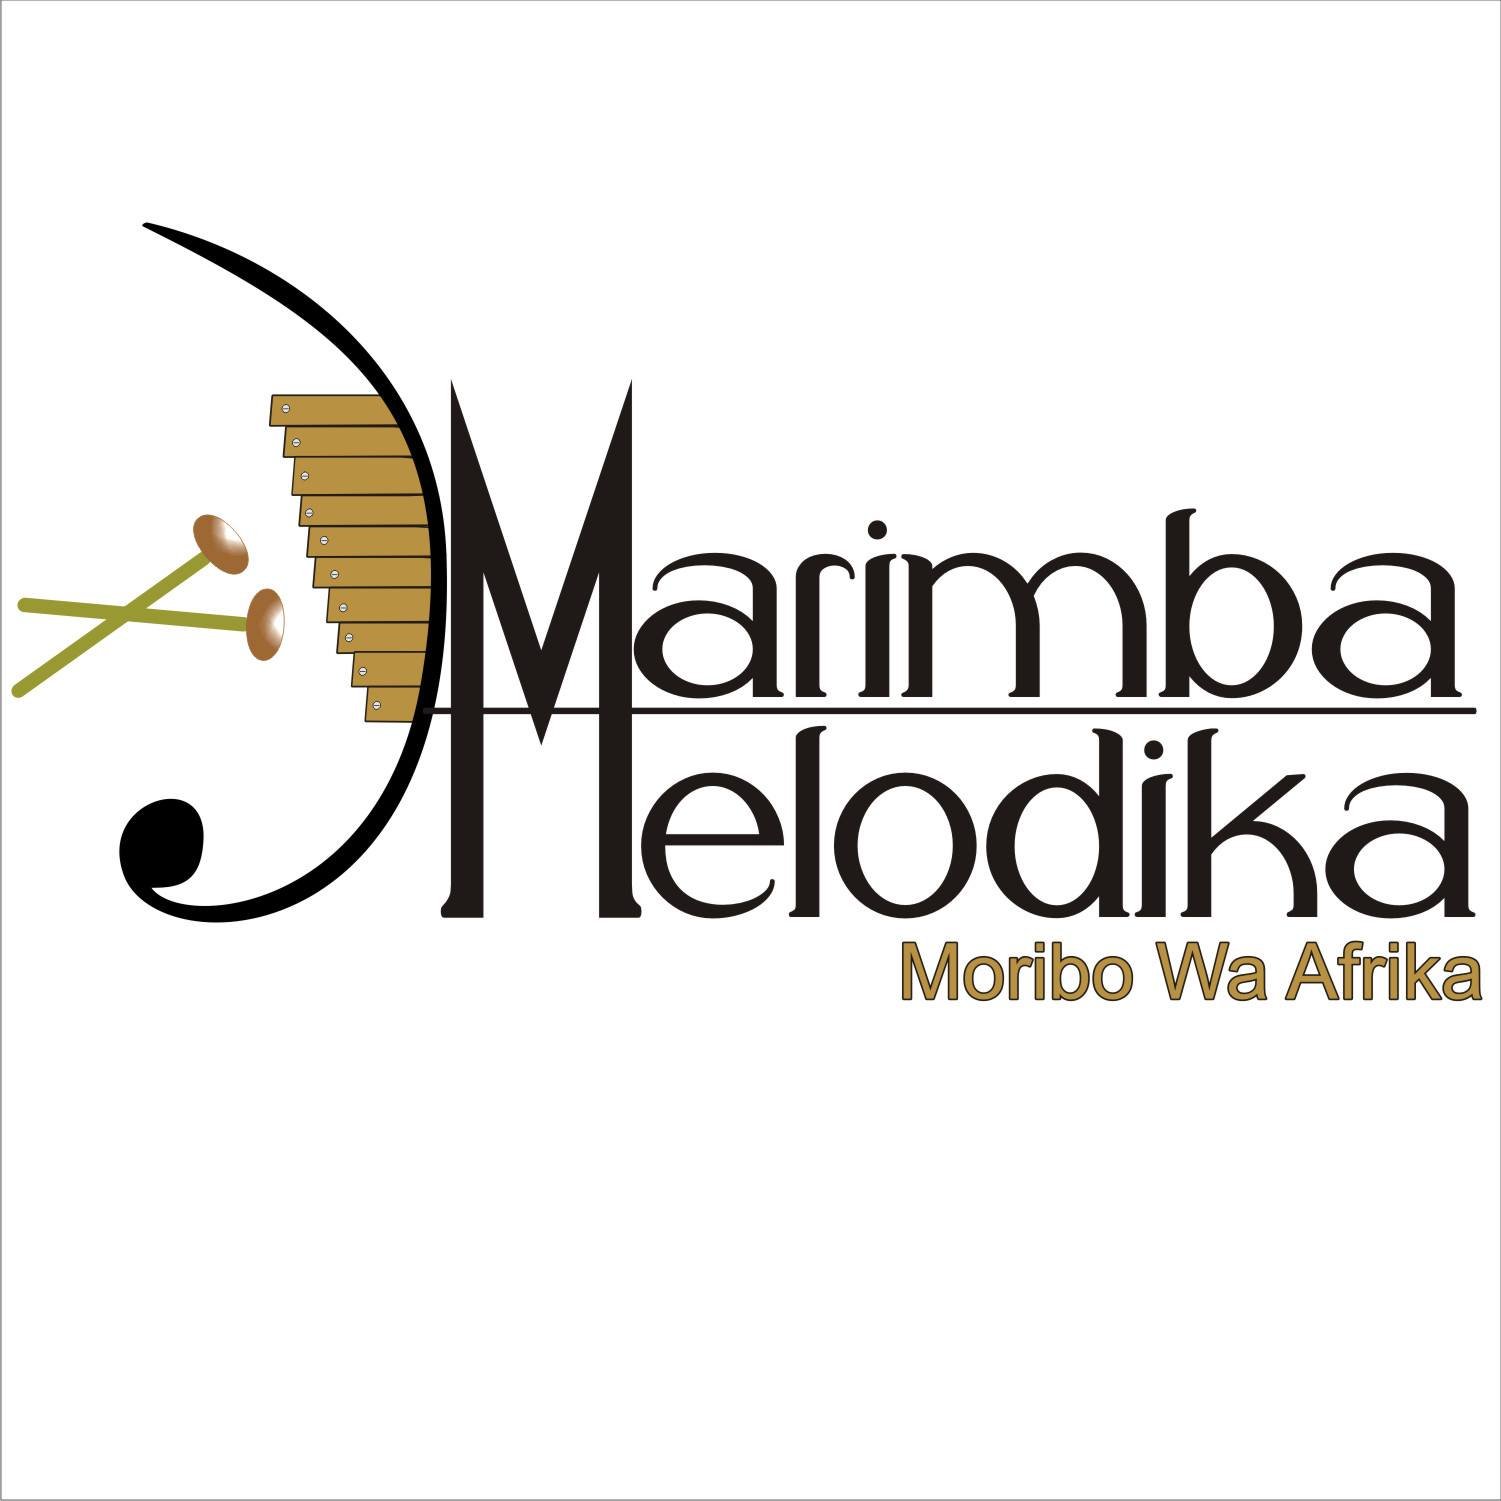 Marimba Melodika is a registered Community based marimba band. We bring performing art closer to the schools, community and businesses, #MoriboWaAforika💃🕺